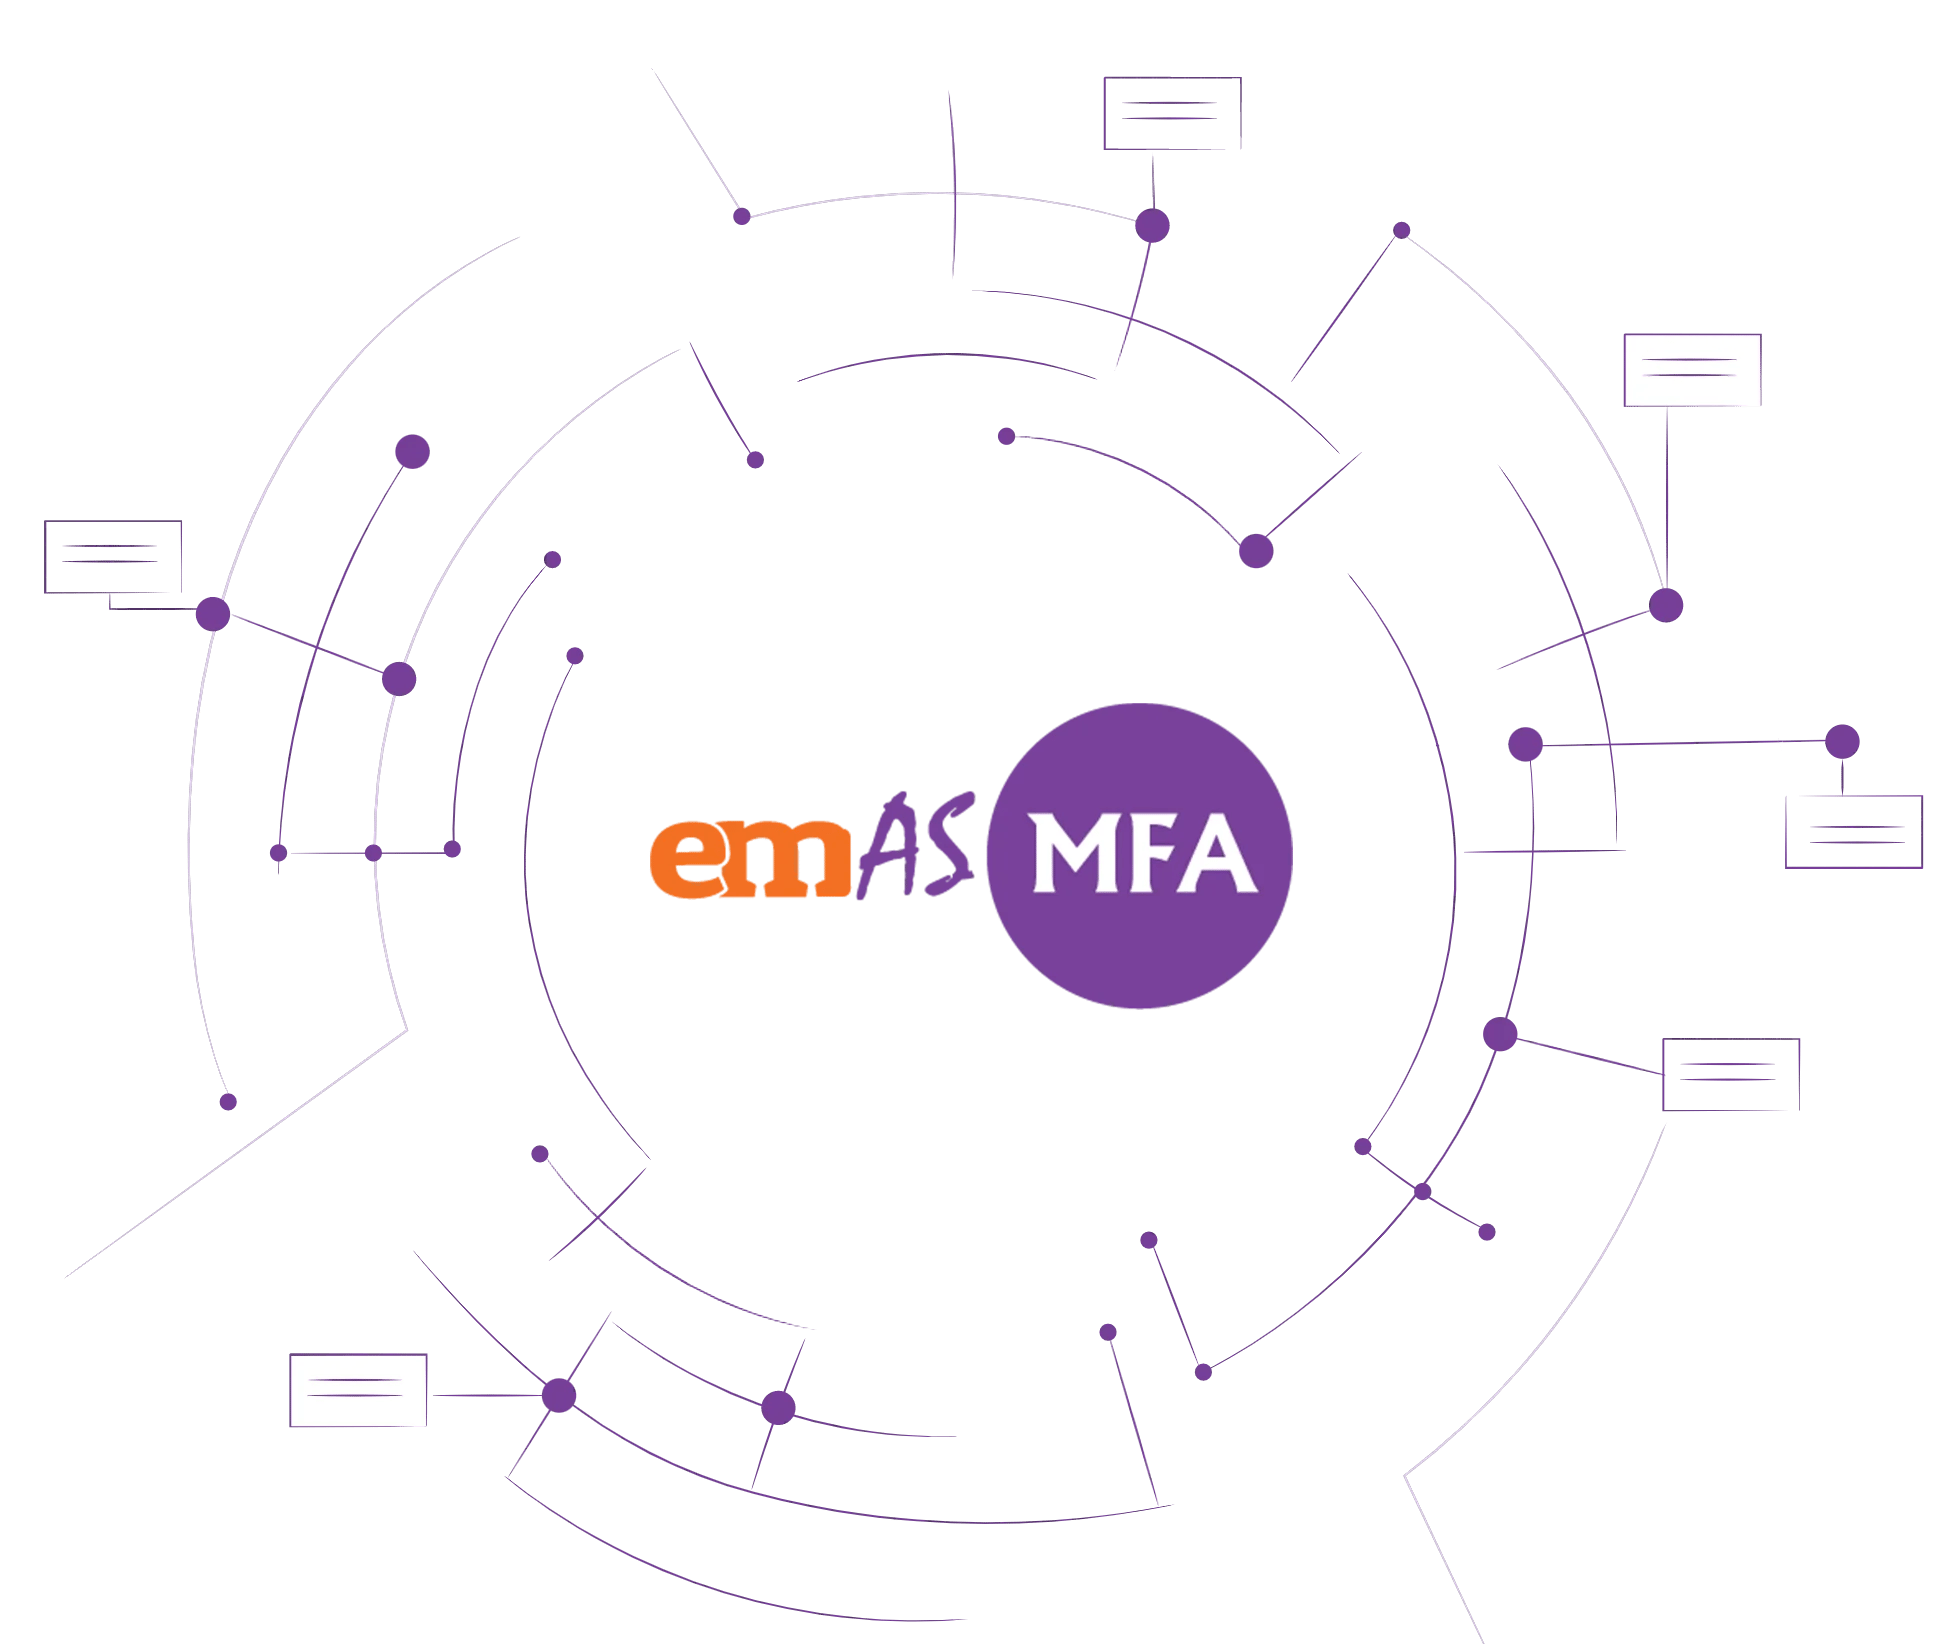 Key Benefits of emAS MFA